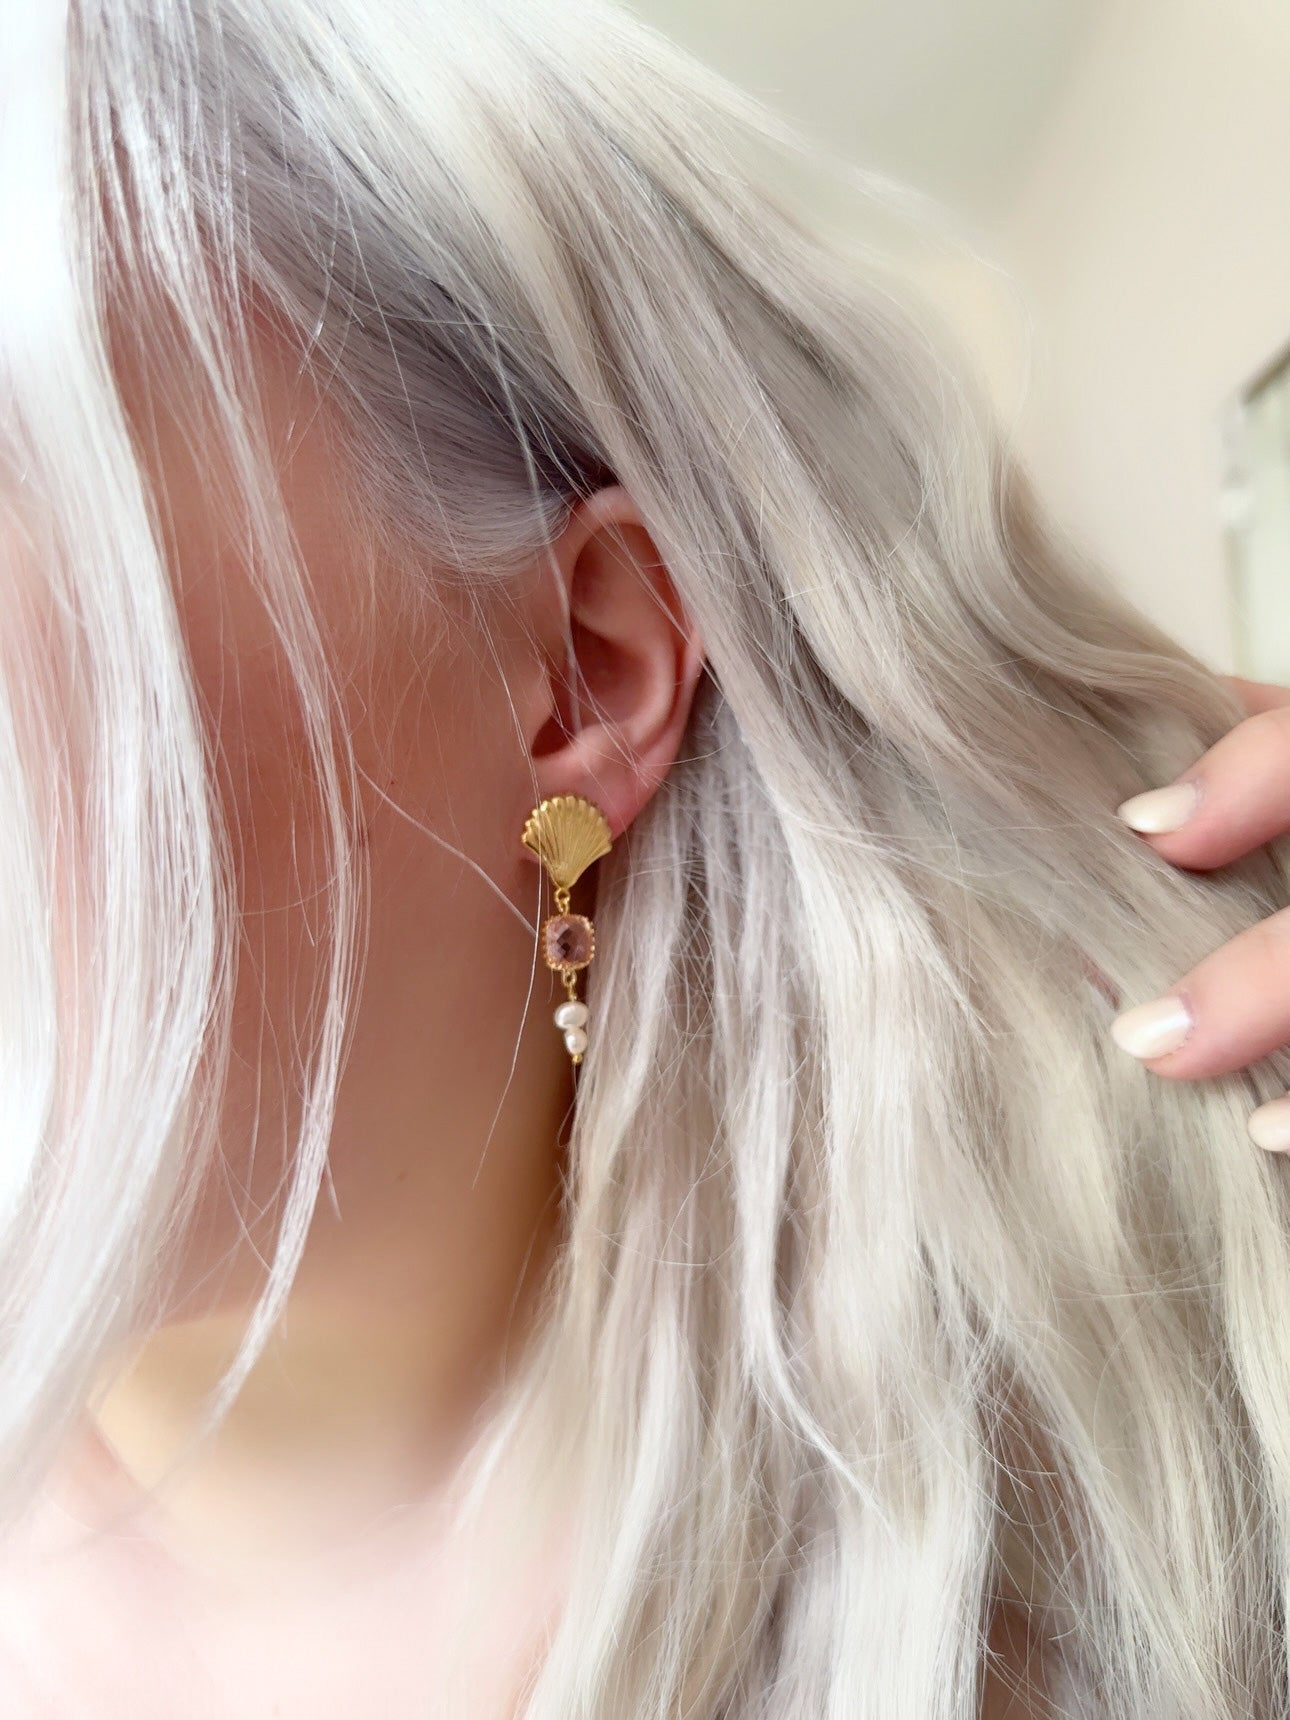 The “Forever Mermaid” earrings